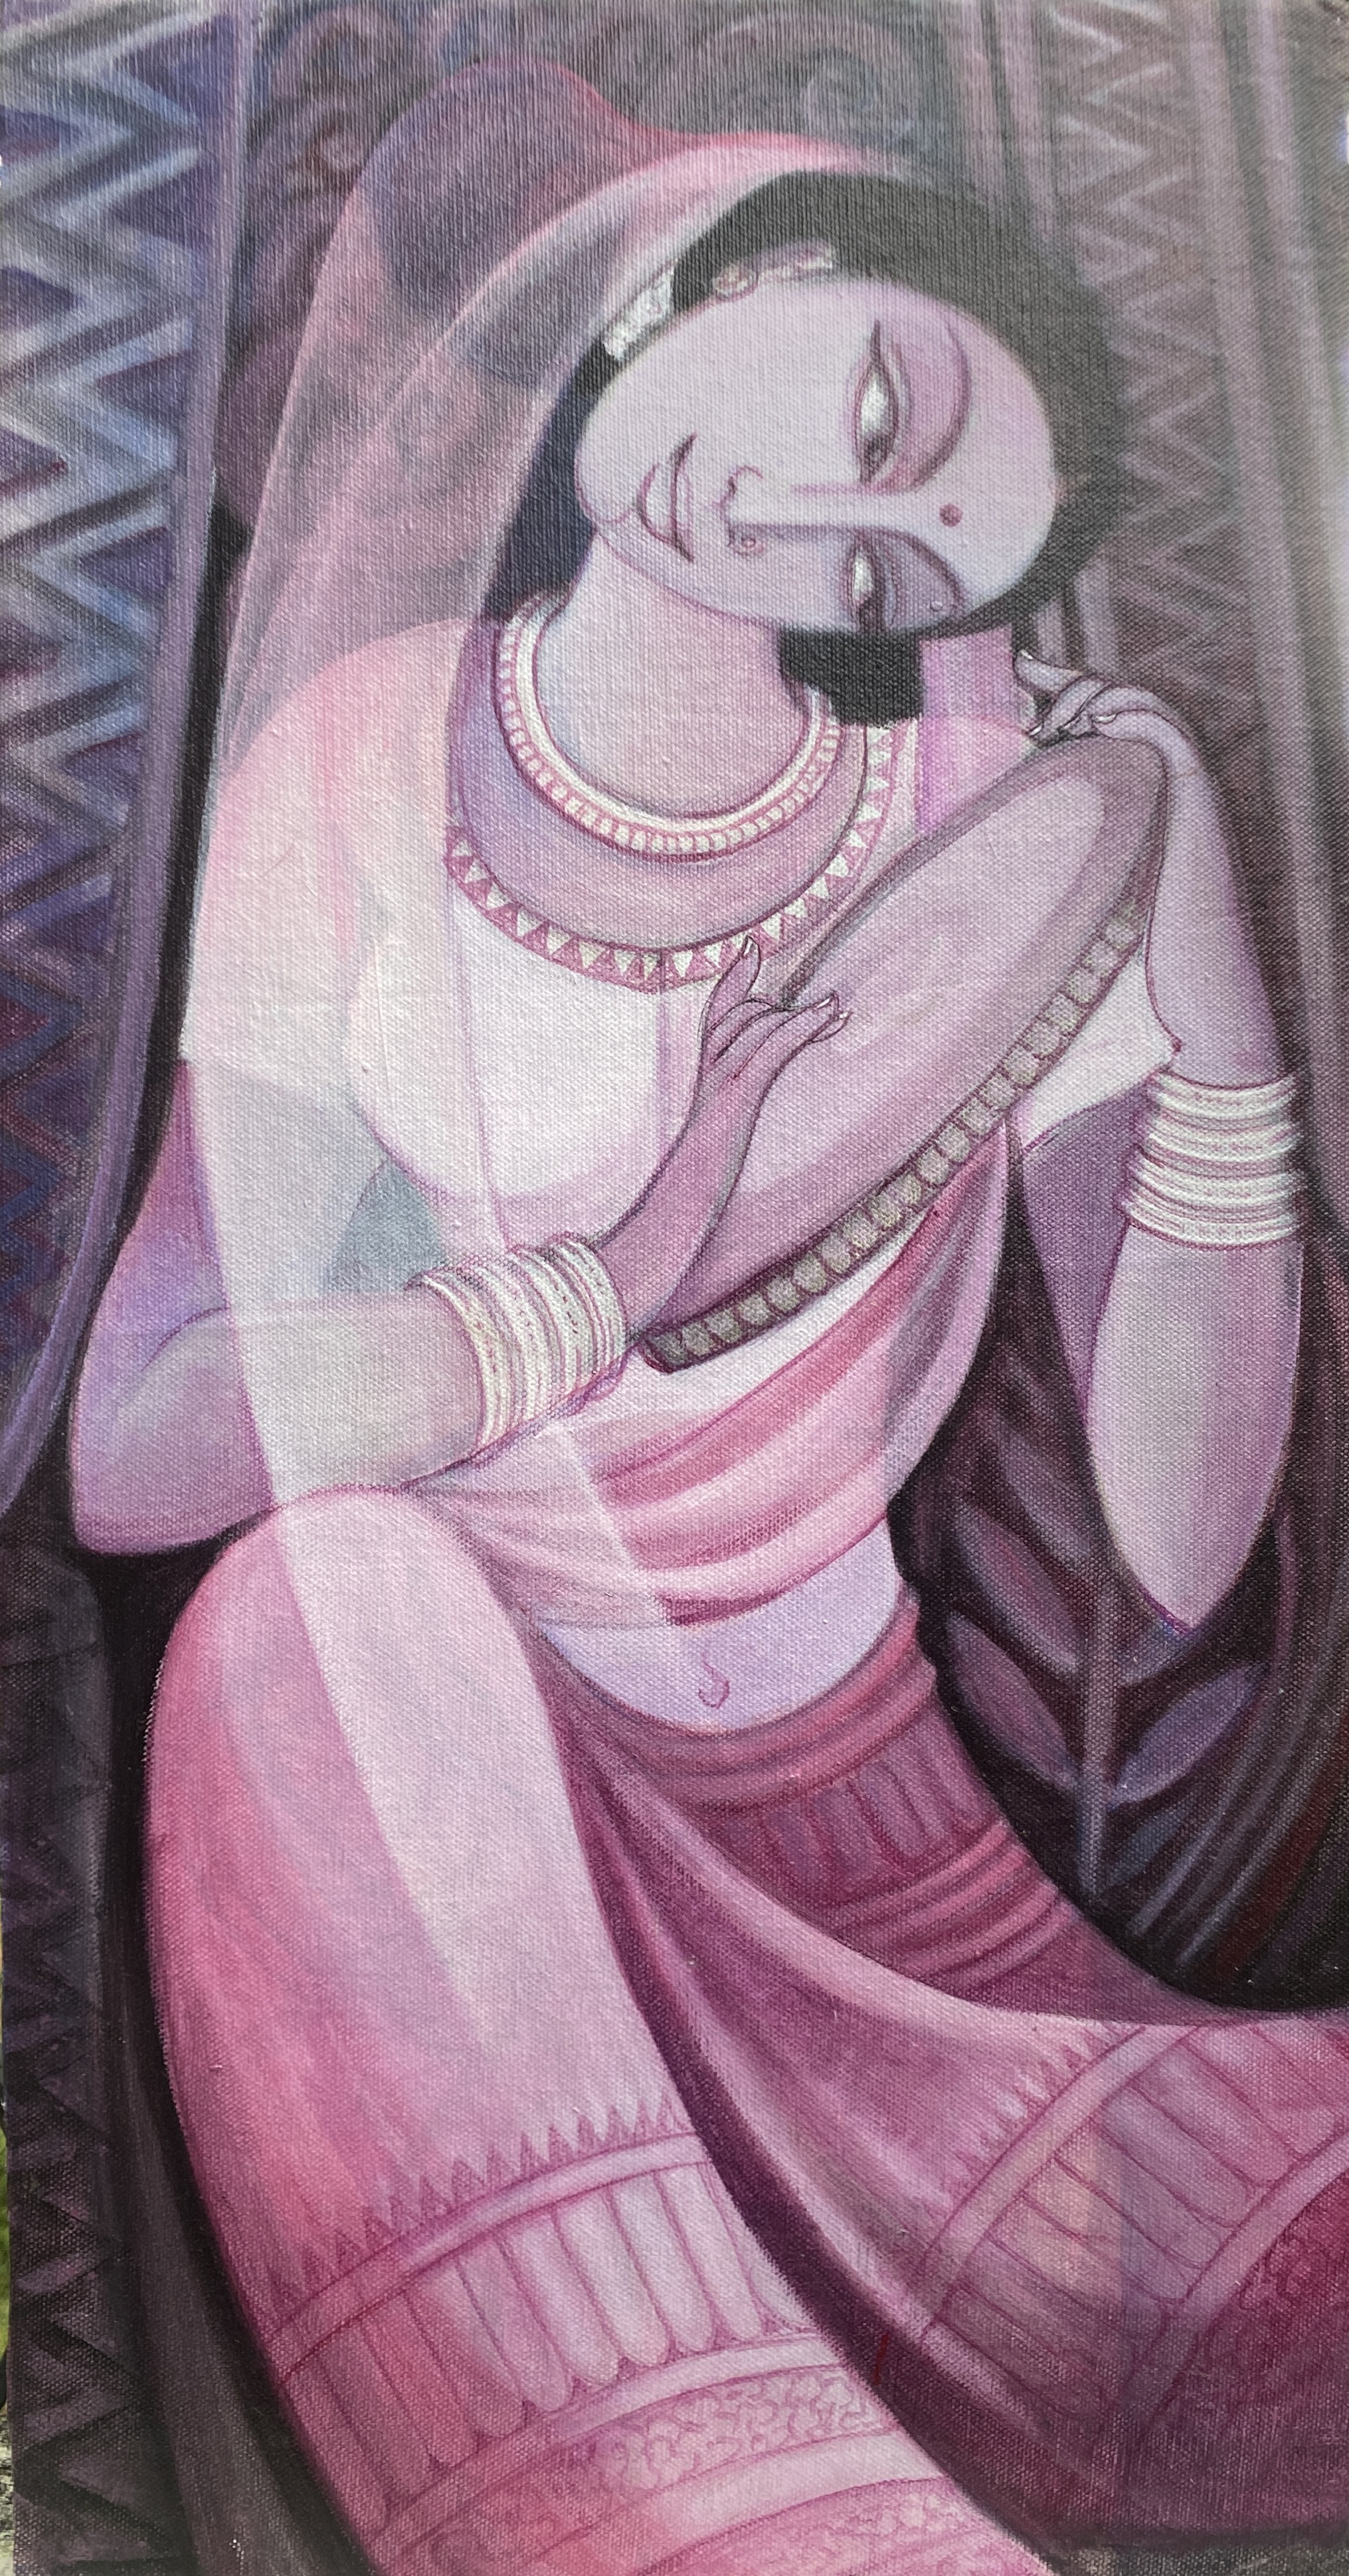 Digasi by Upul Jayashantha